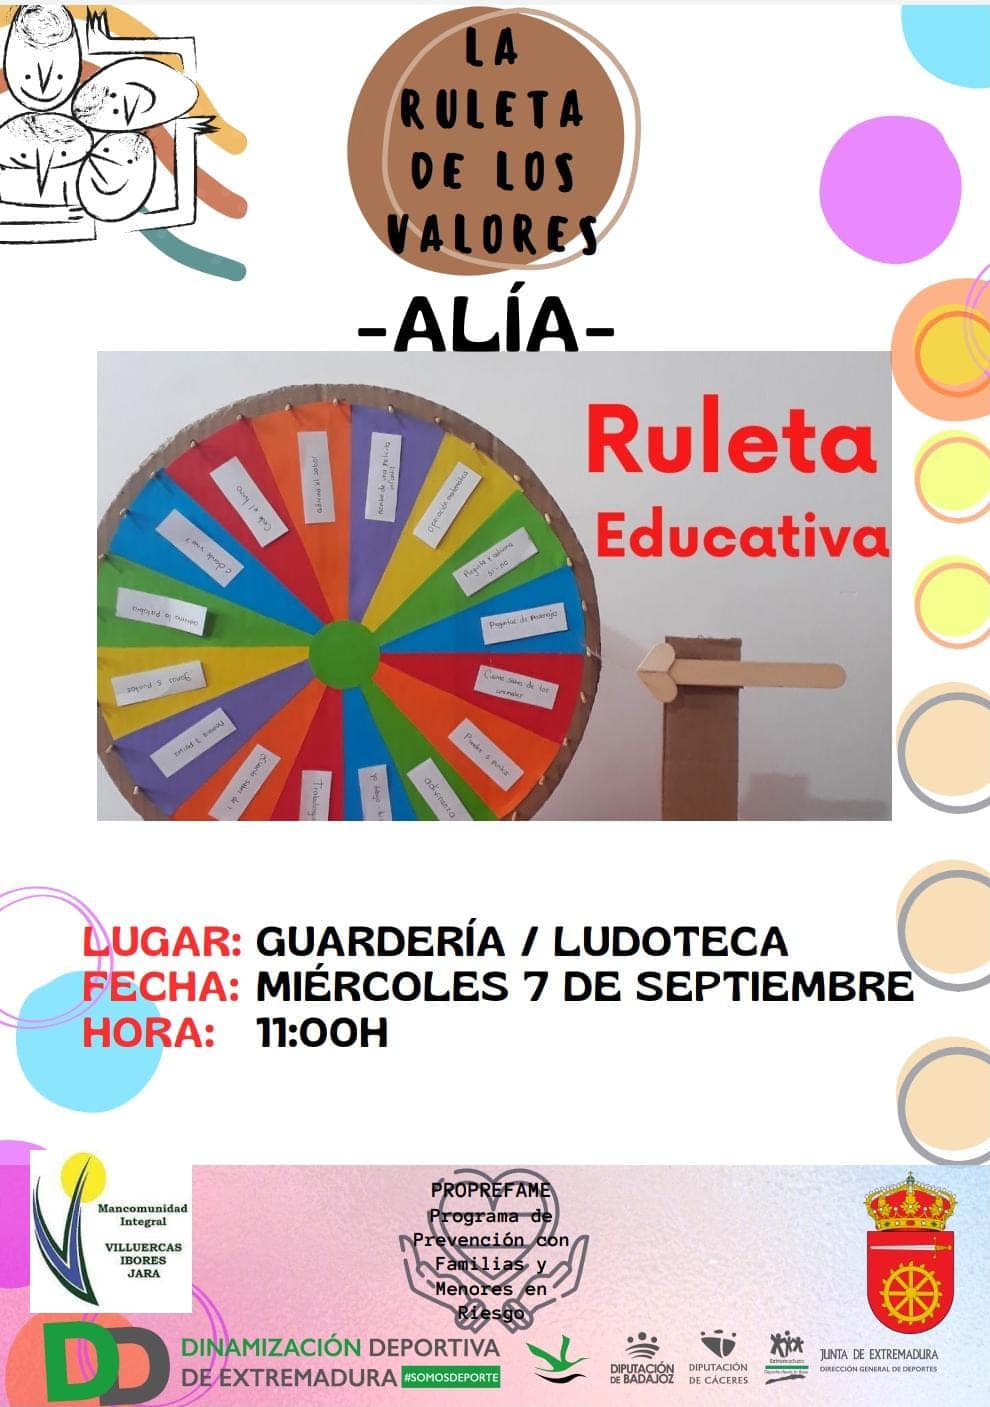 La ruleta educativa (2022) - Alía (Cáceres)